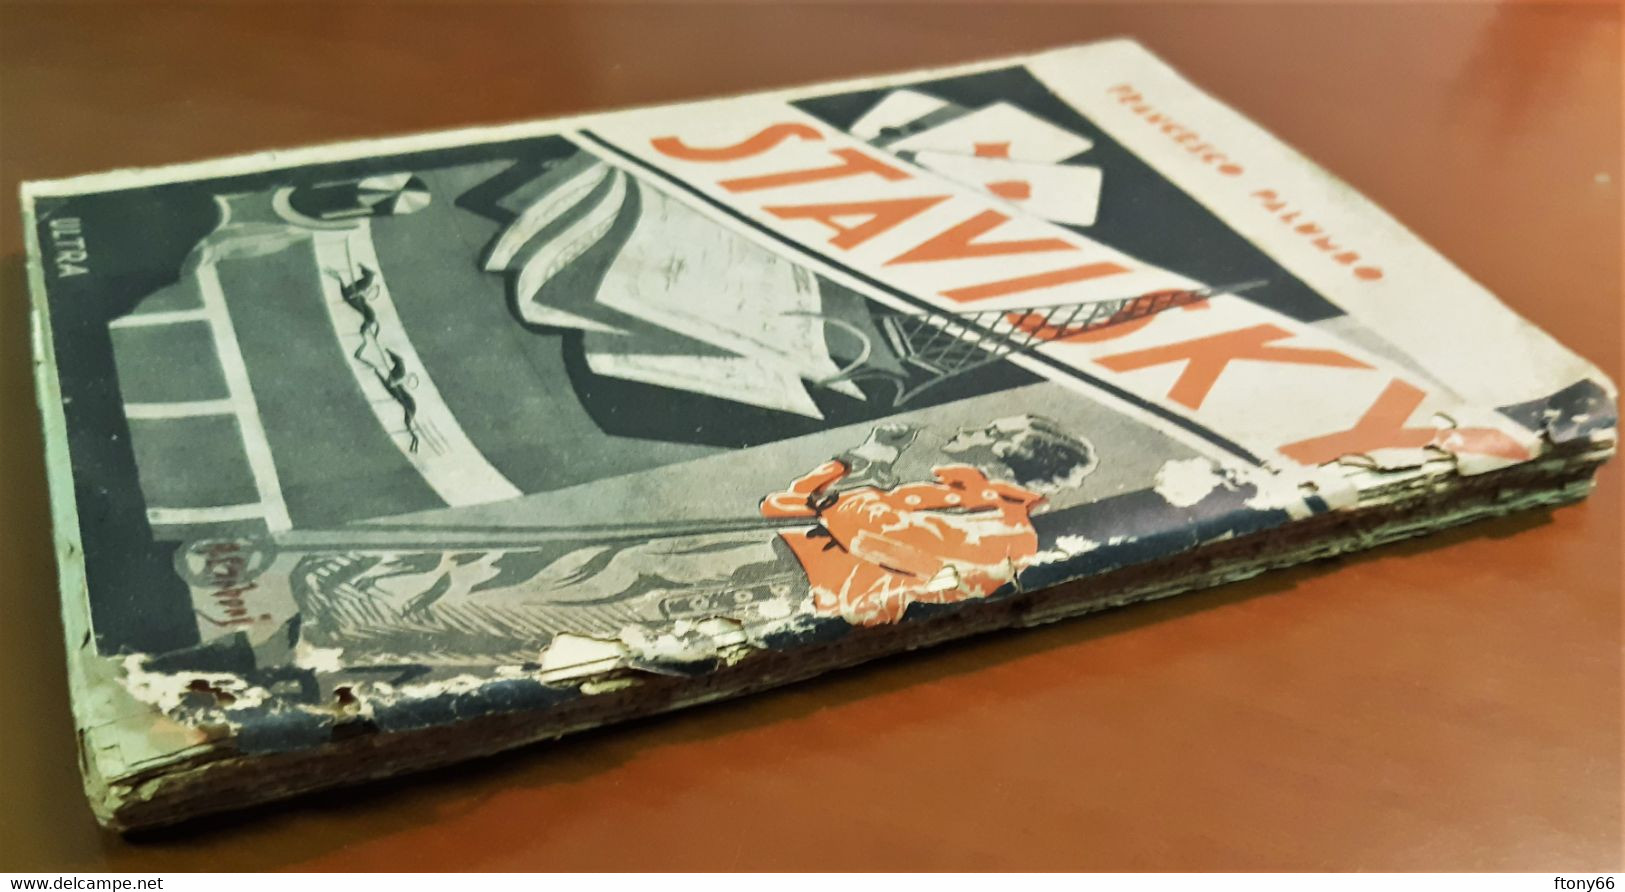 MA21 Francesco Palumbo "STAVINSKY" - Edizione Ultra, 1934 1^ Edizione - Oud